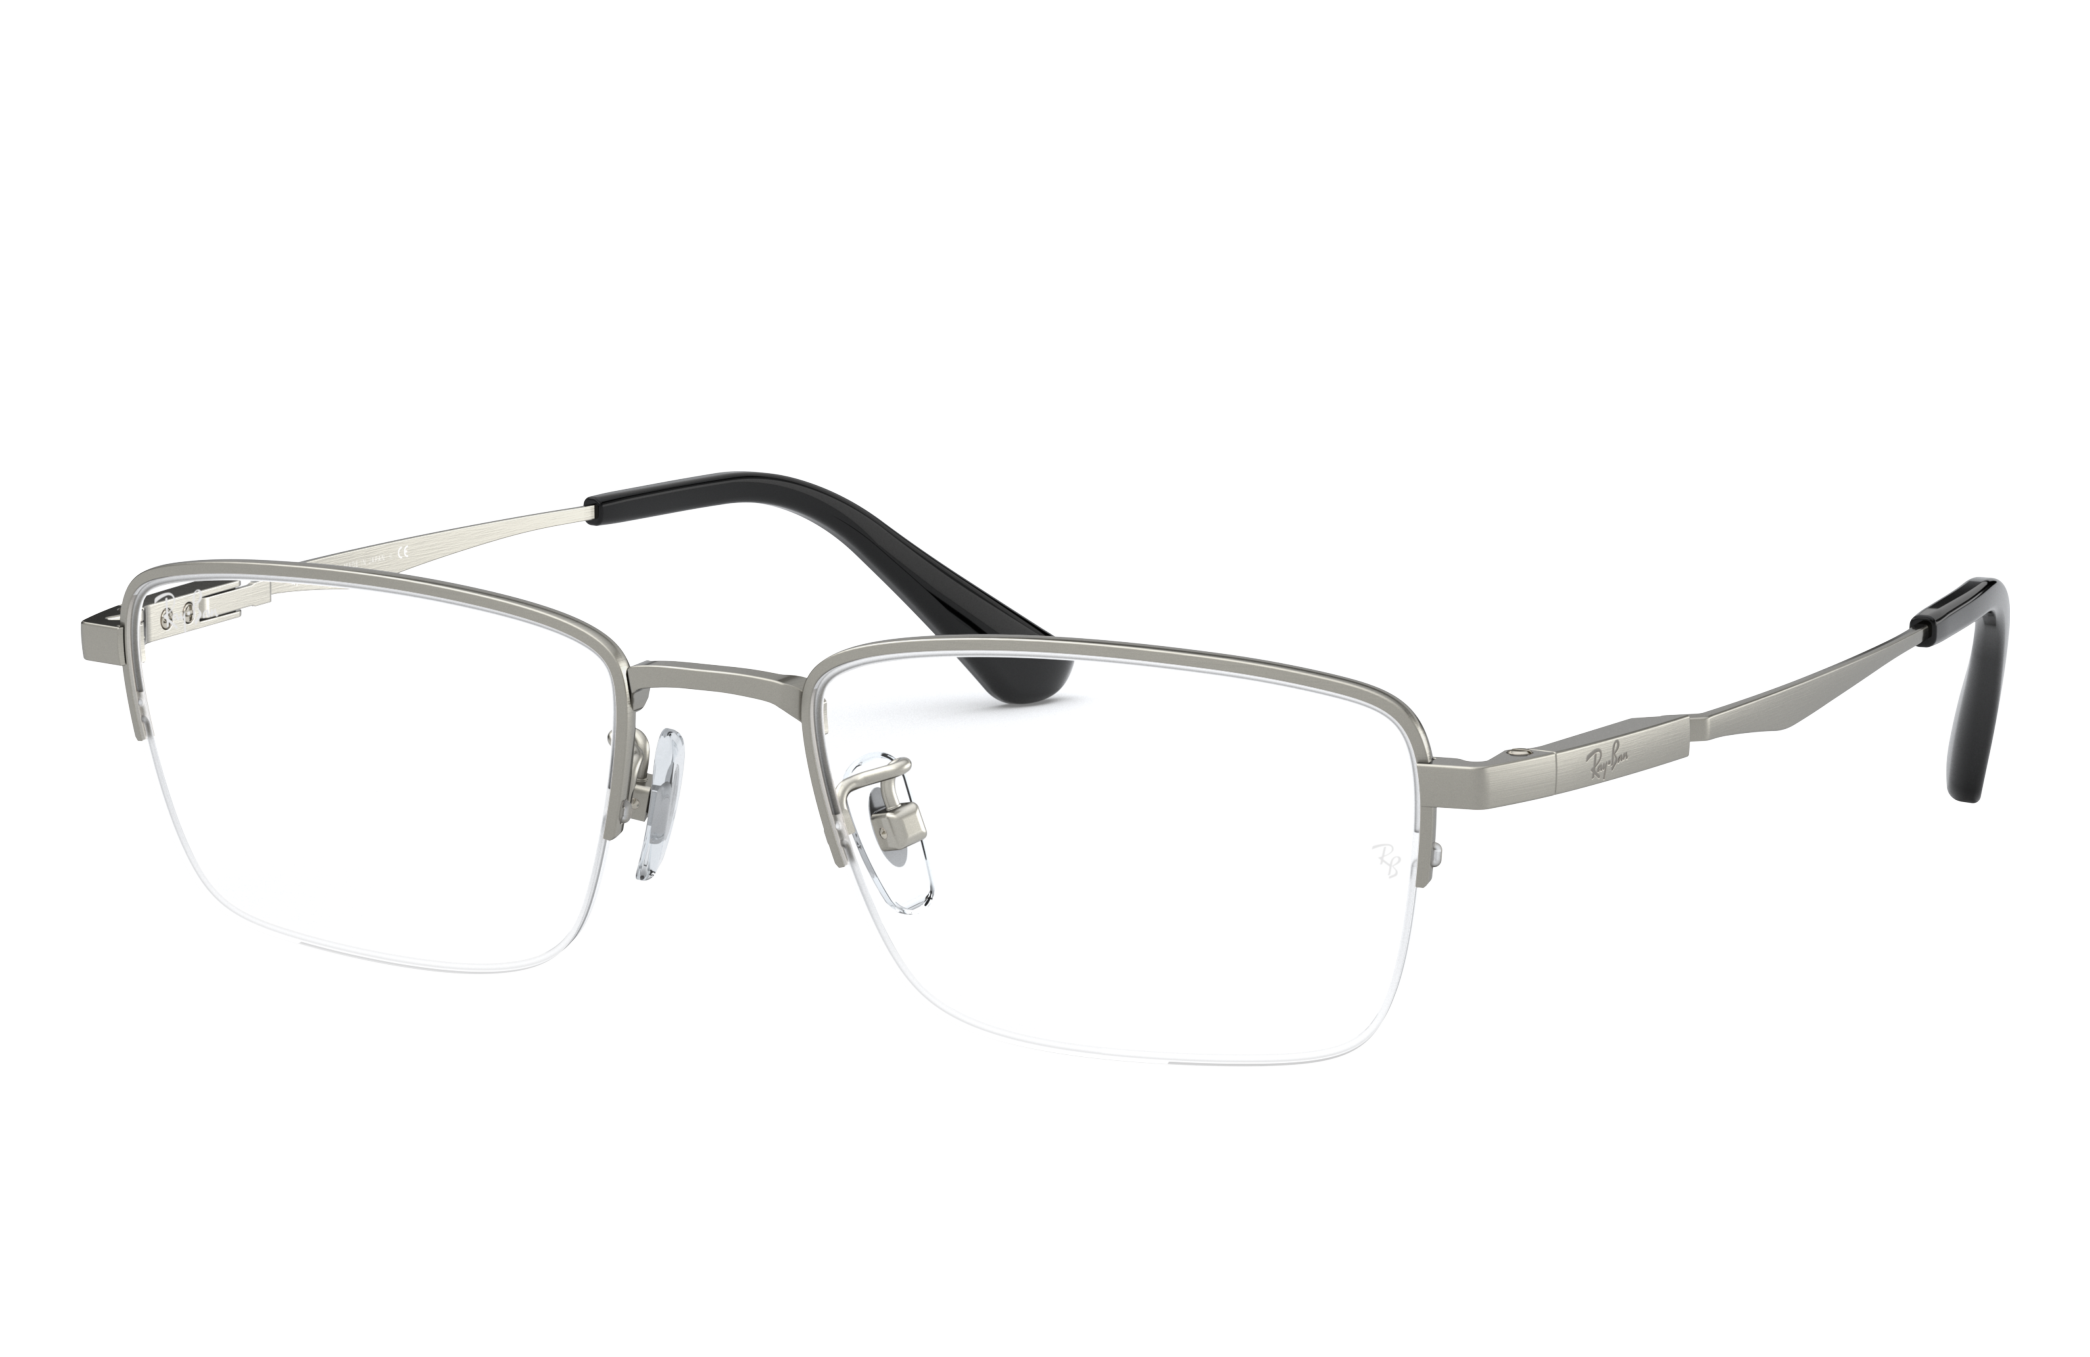 Rb8763 Optics Eyeglasses with Gunmetal Frame - RB8763D | Ray-Ban®